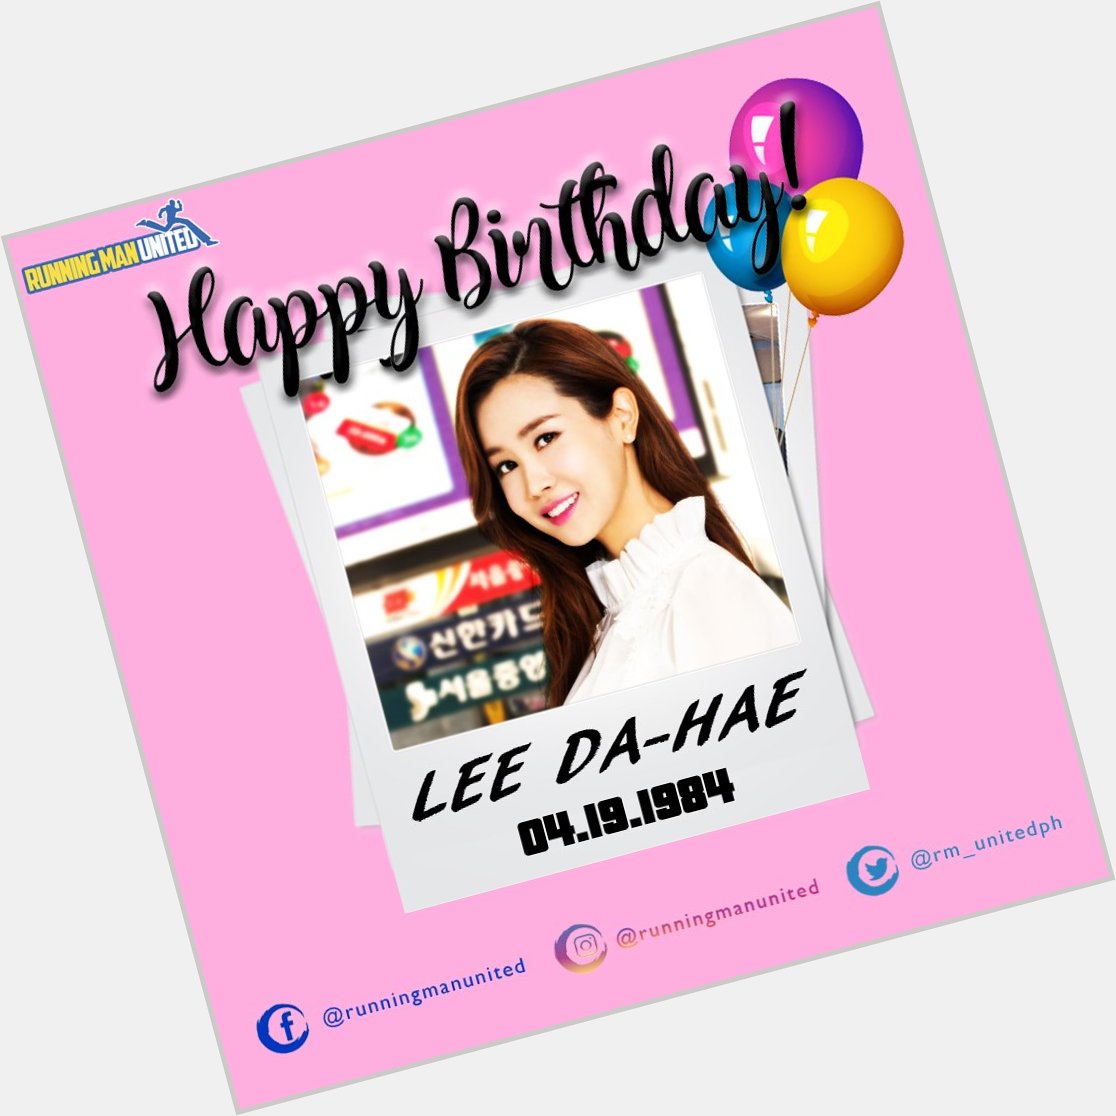 Happy Birthday Lee Da-hae! 